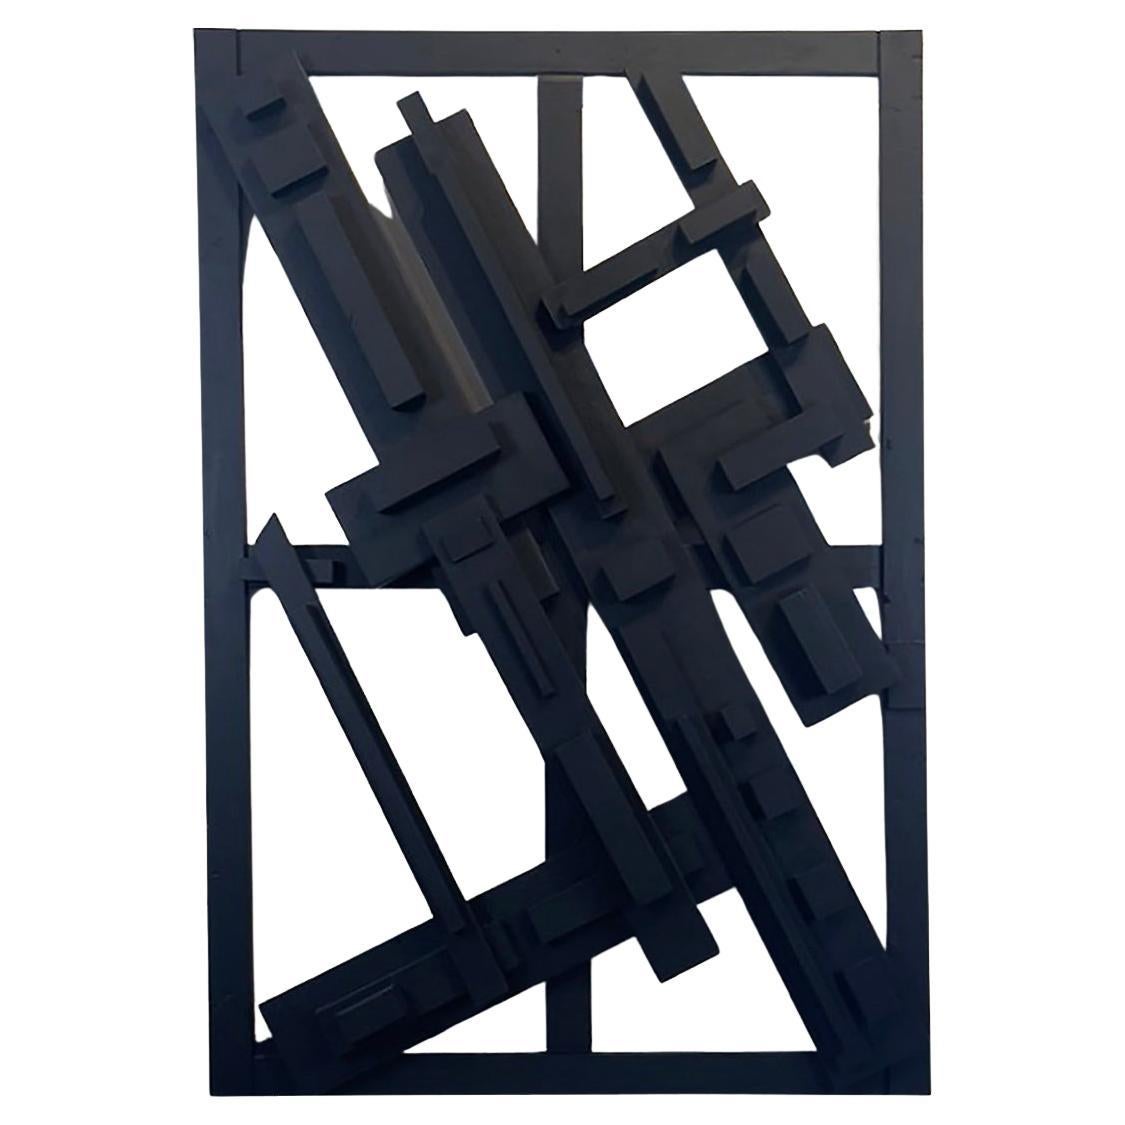 Skyline 31 by Jordan Tabachnik, abstract compositions, brutalist, sculpture